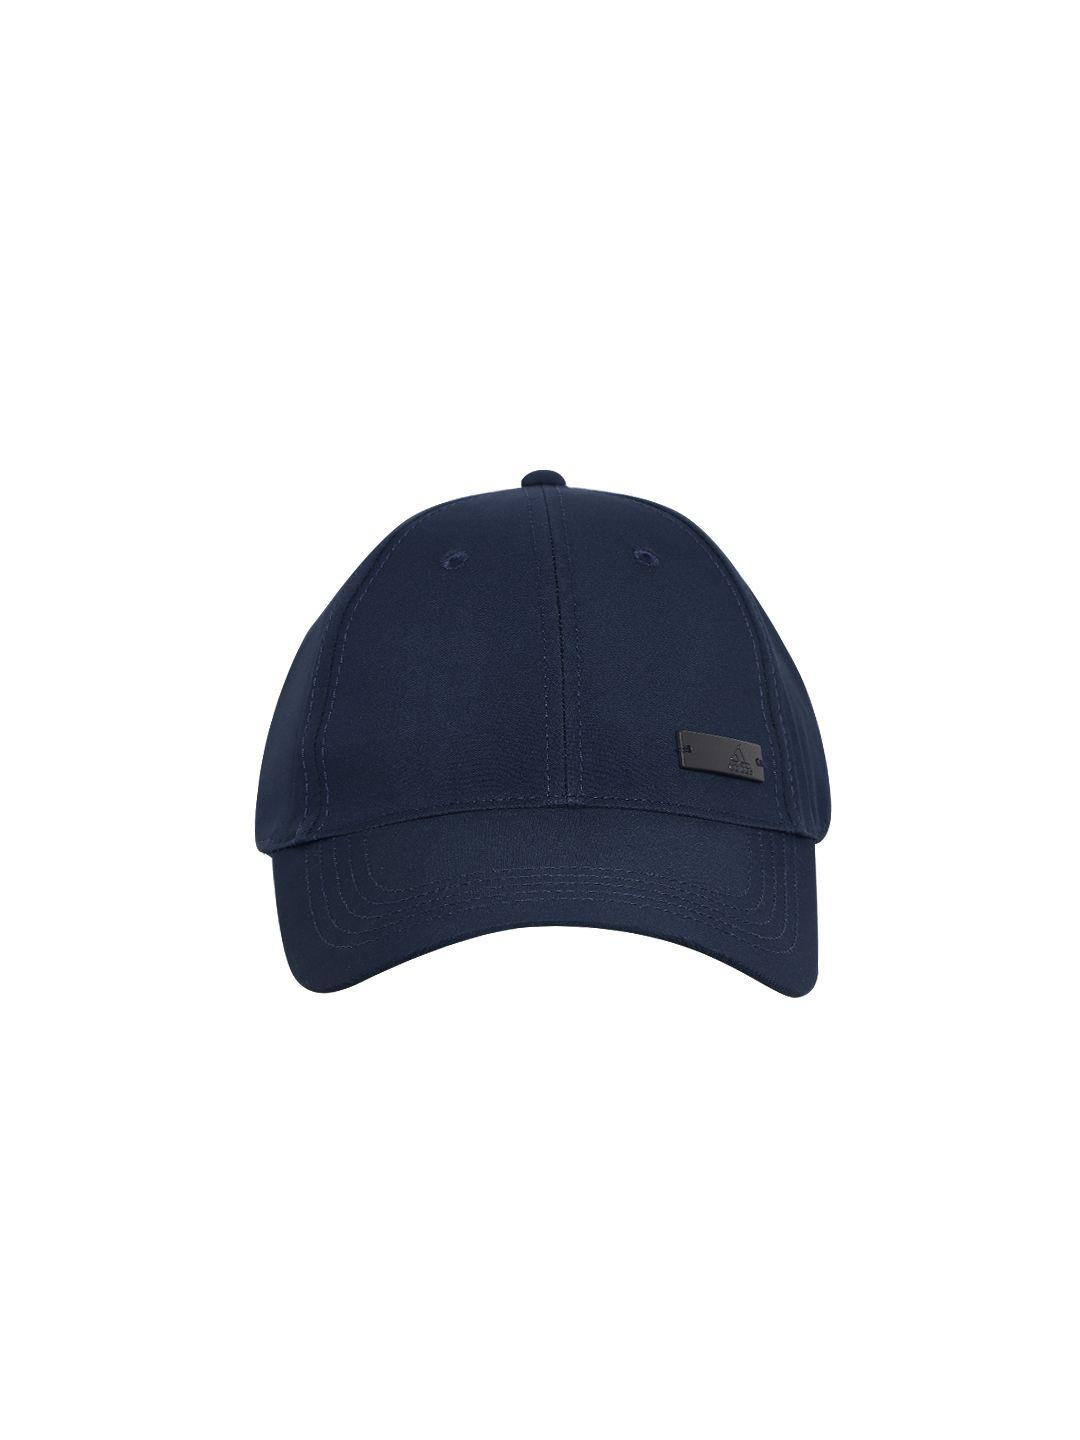 adidas unisex brand logo metal tag lightweight baseball cap